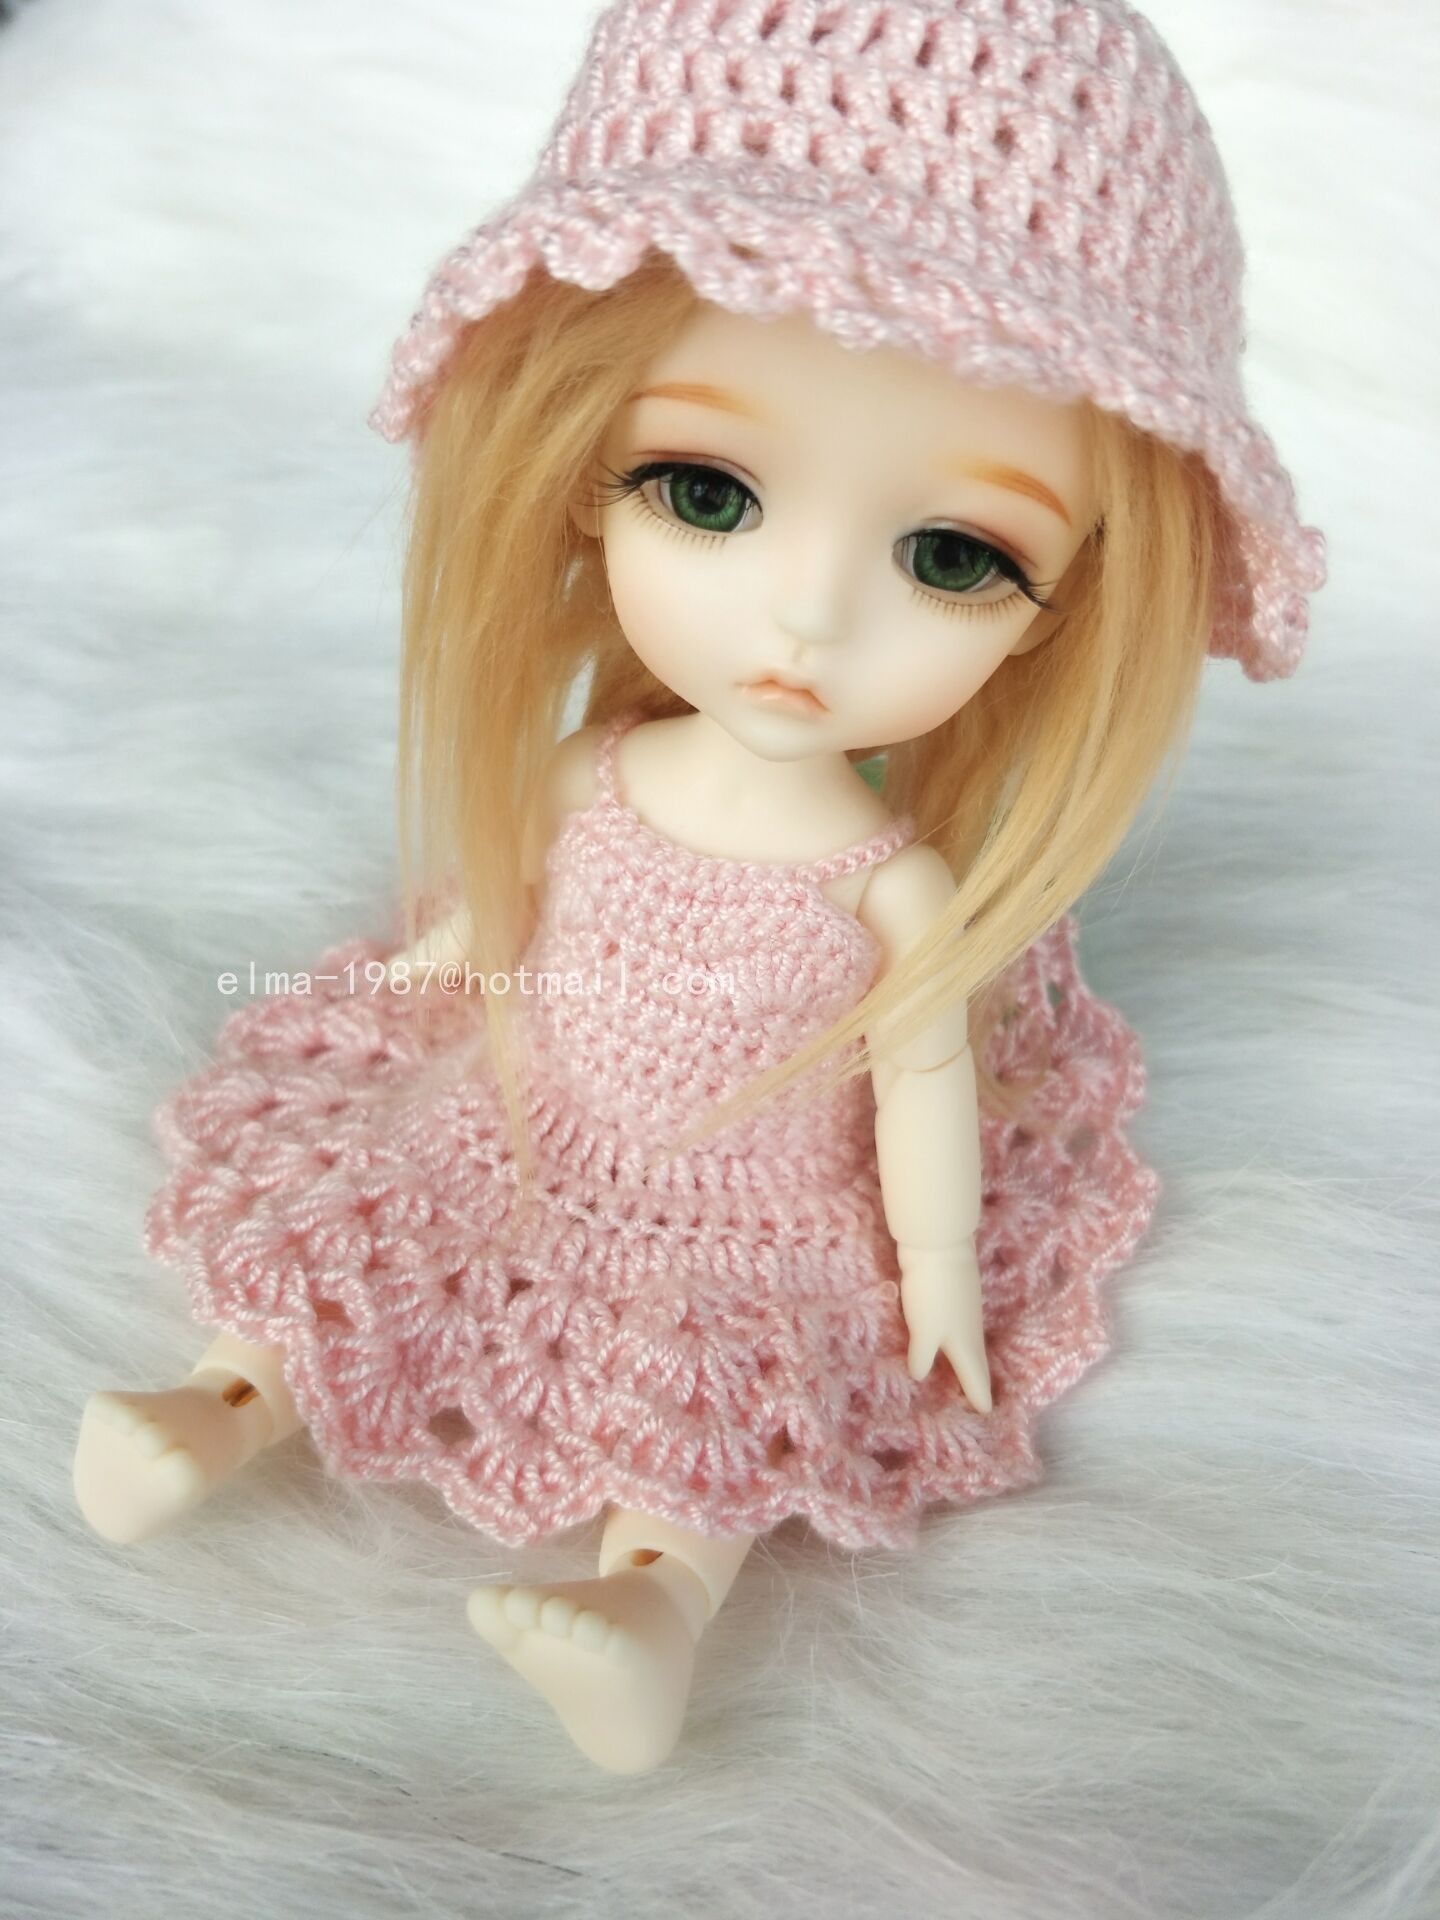 Crochet pink dress set for 1/8 size BJD